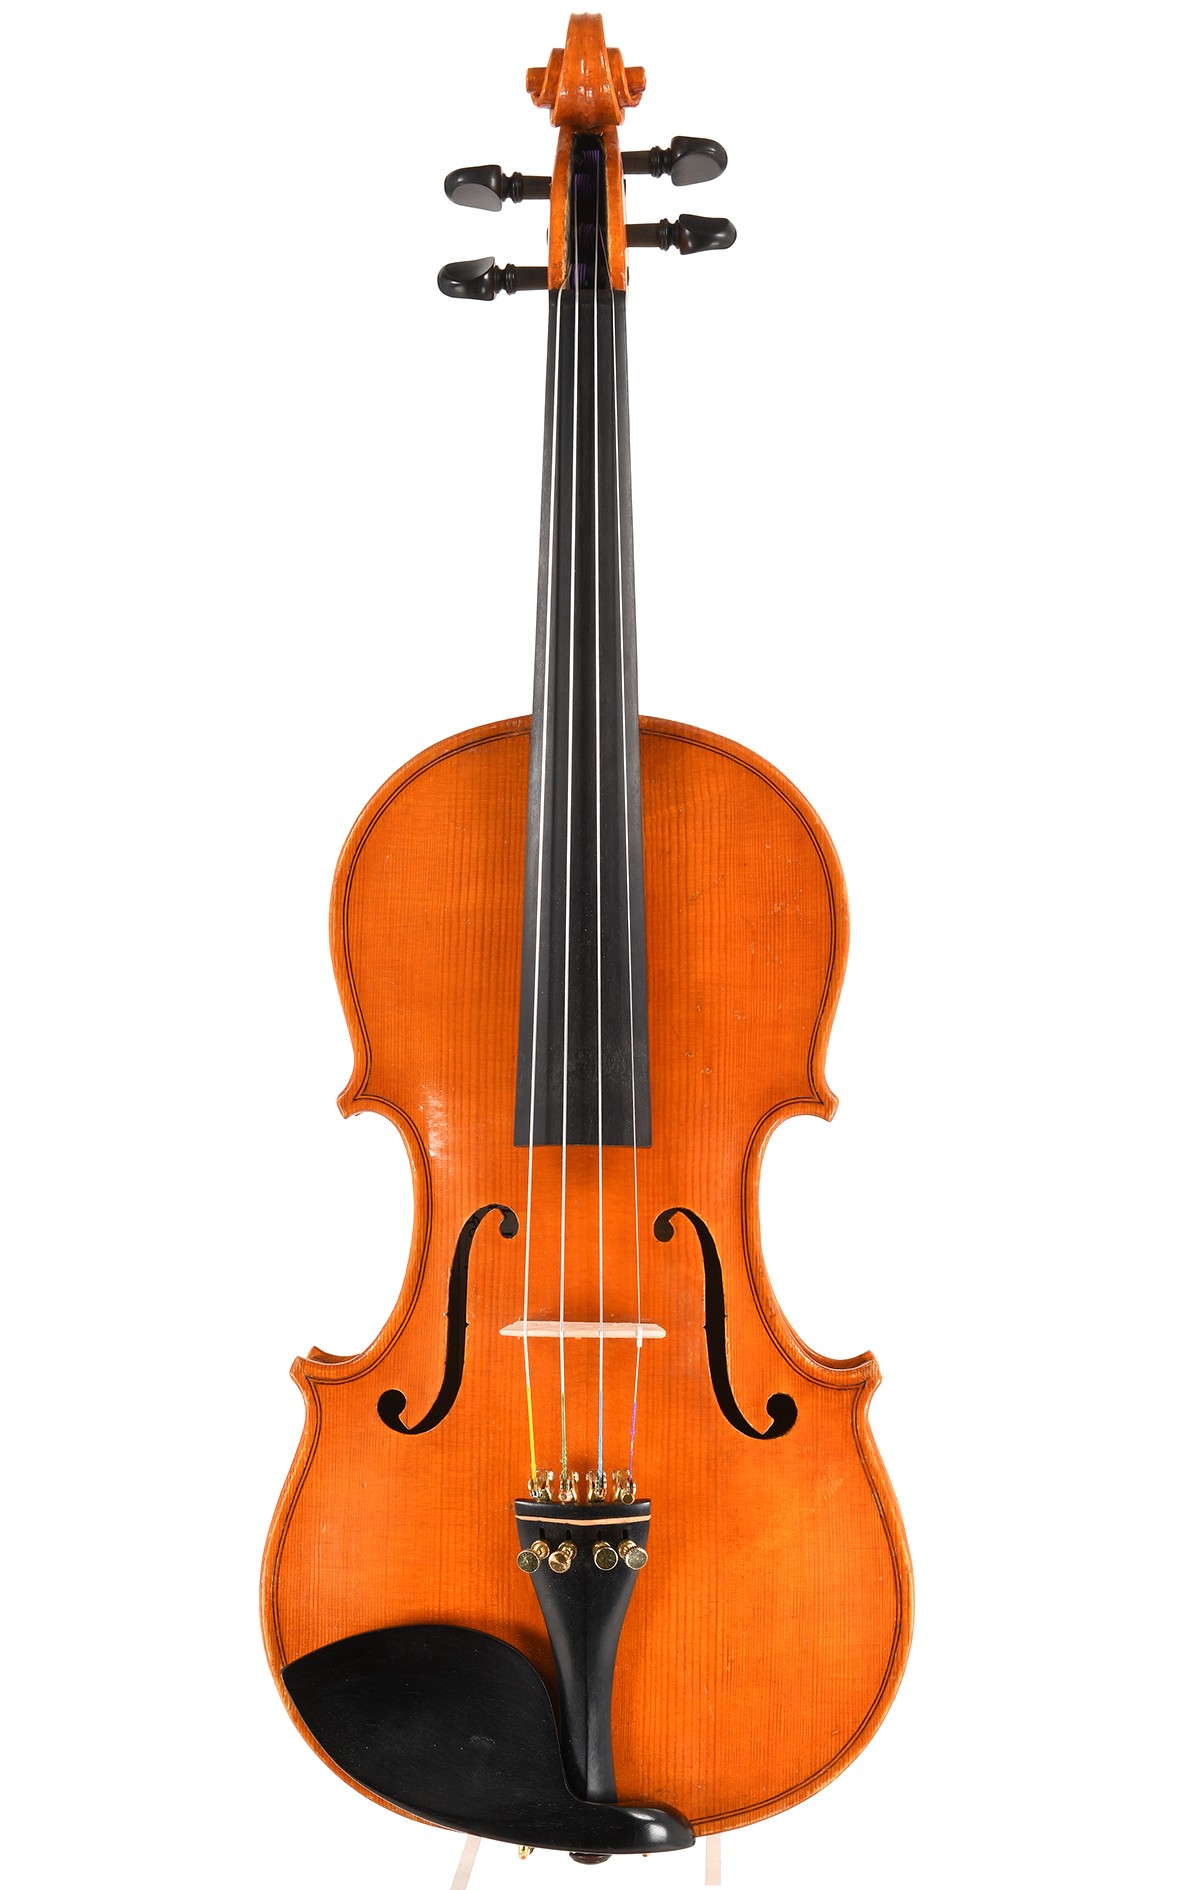 Franco Barozzi violin from Rovereto